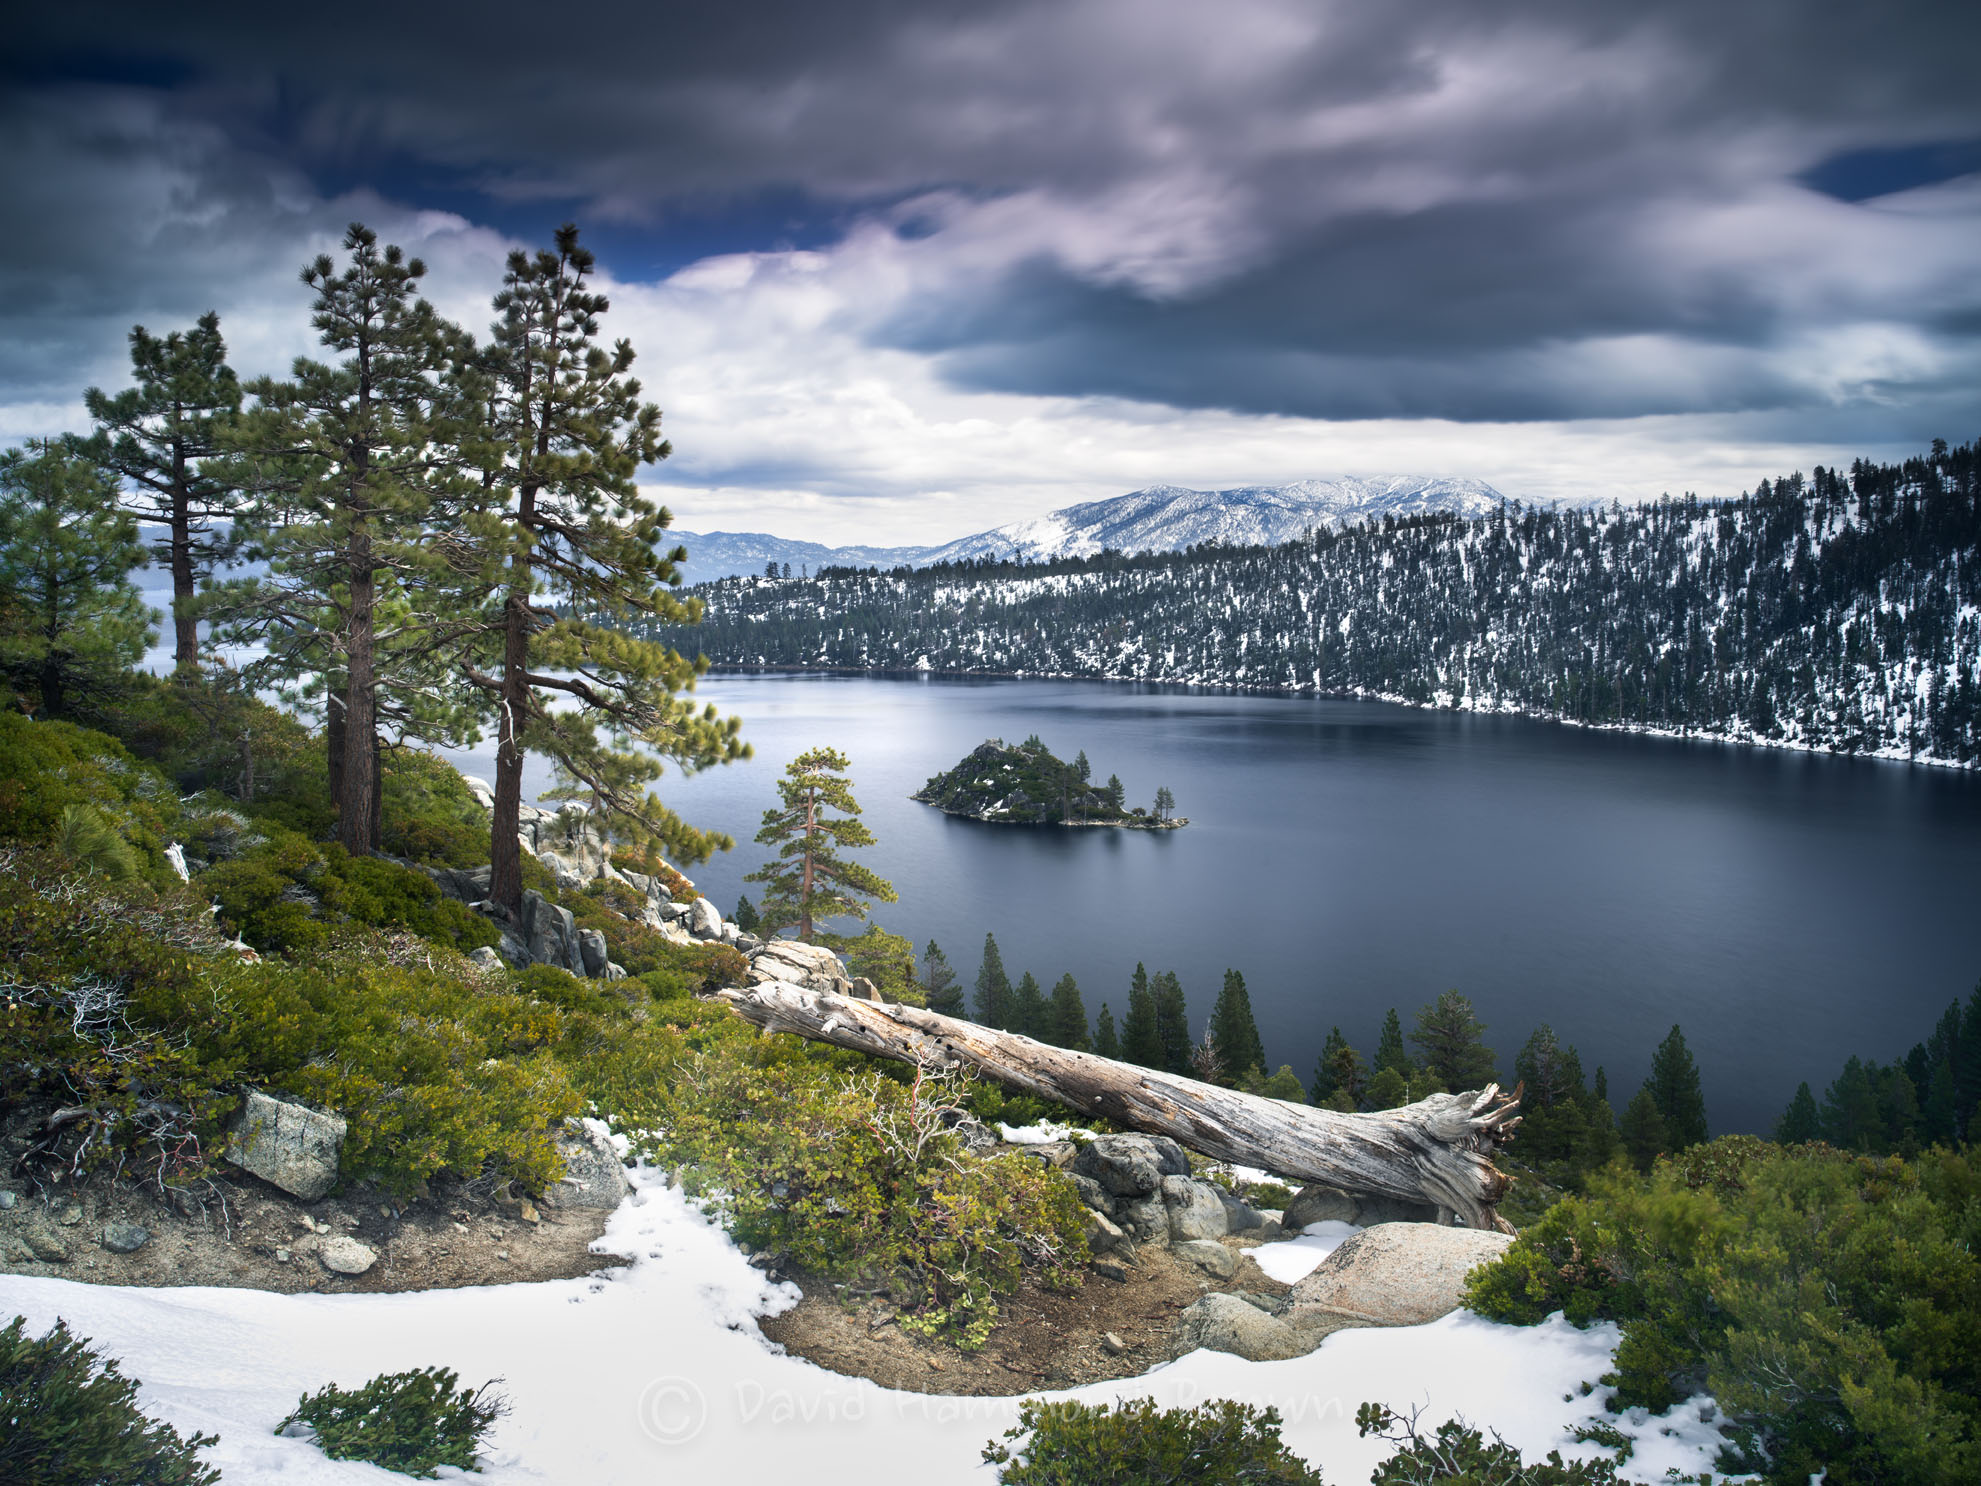 David Hammond Brown Photography - Emerald Bay - South Lake Tahoe, California